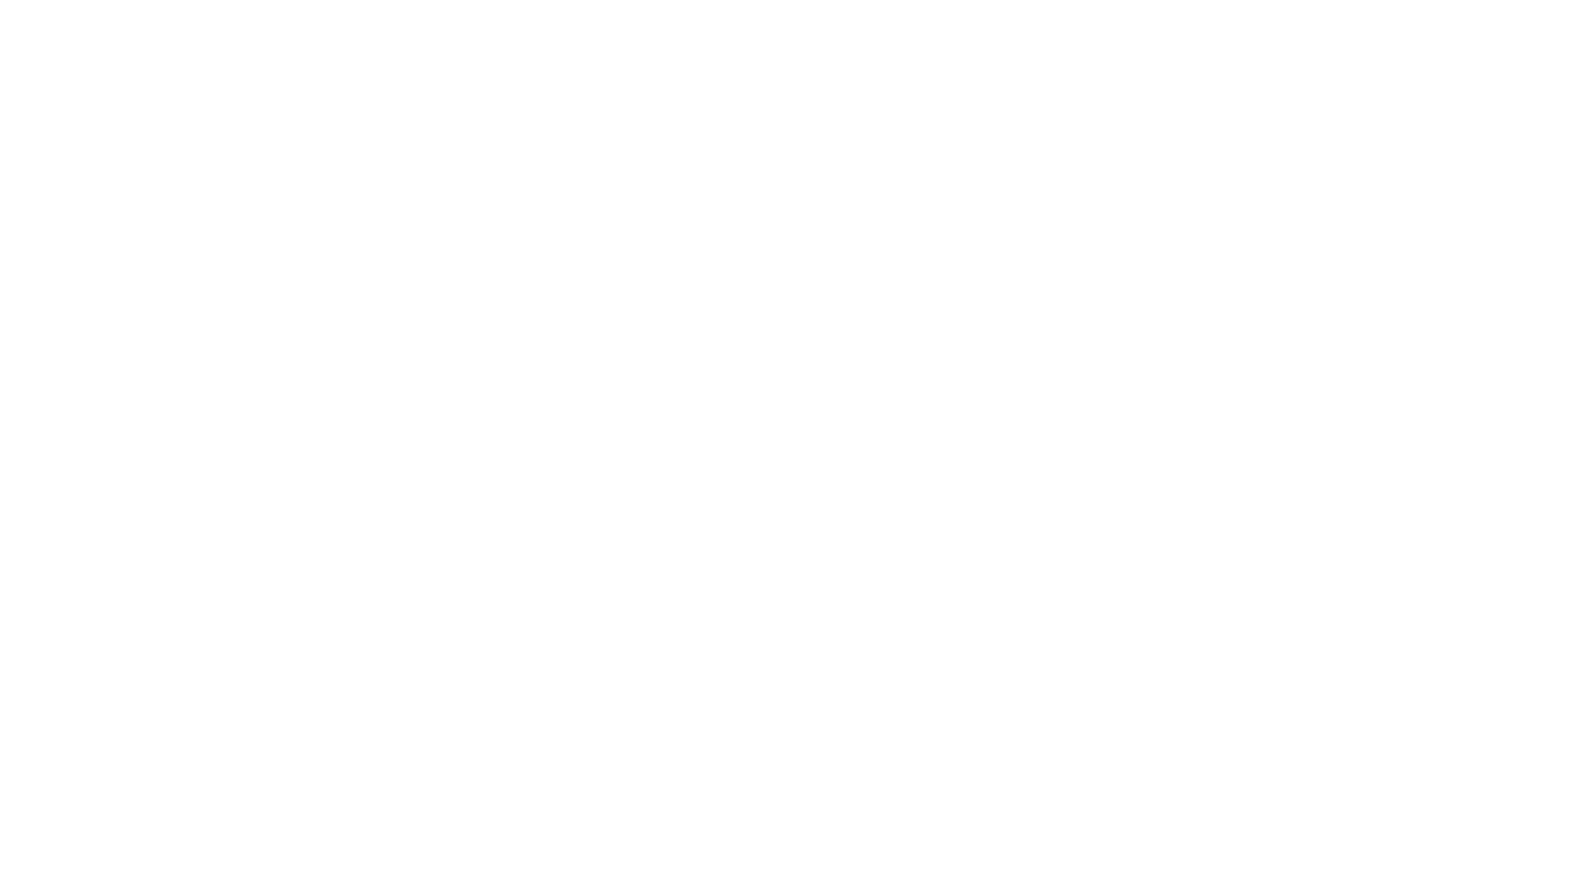 Alkaline Water Company logo for dark backgrounds (transparent PNG)